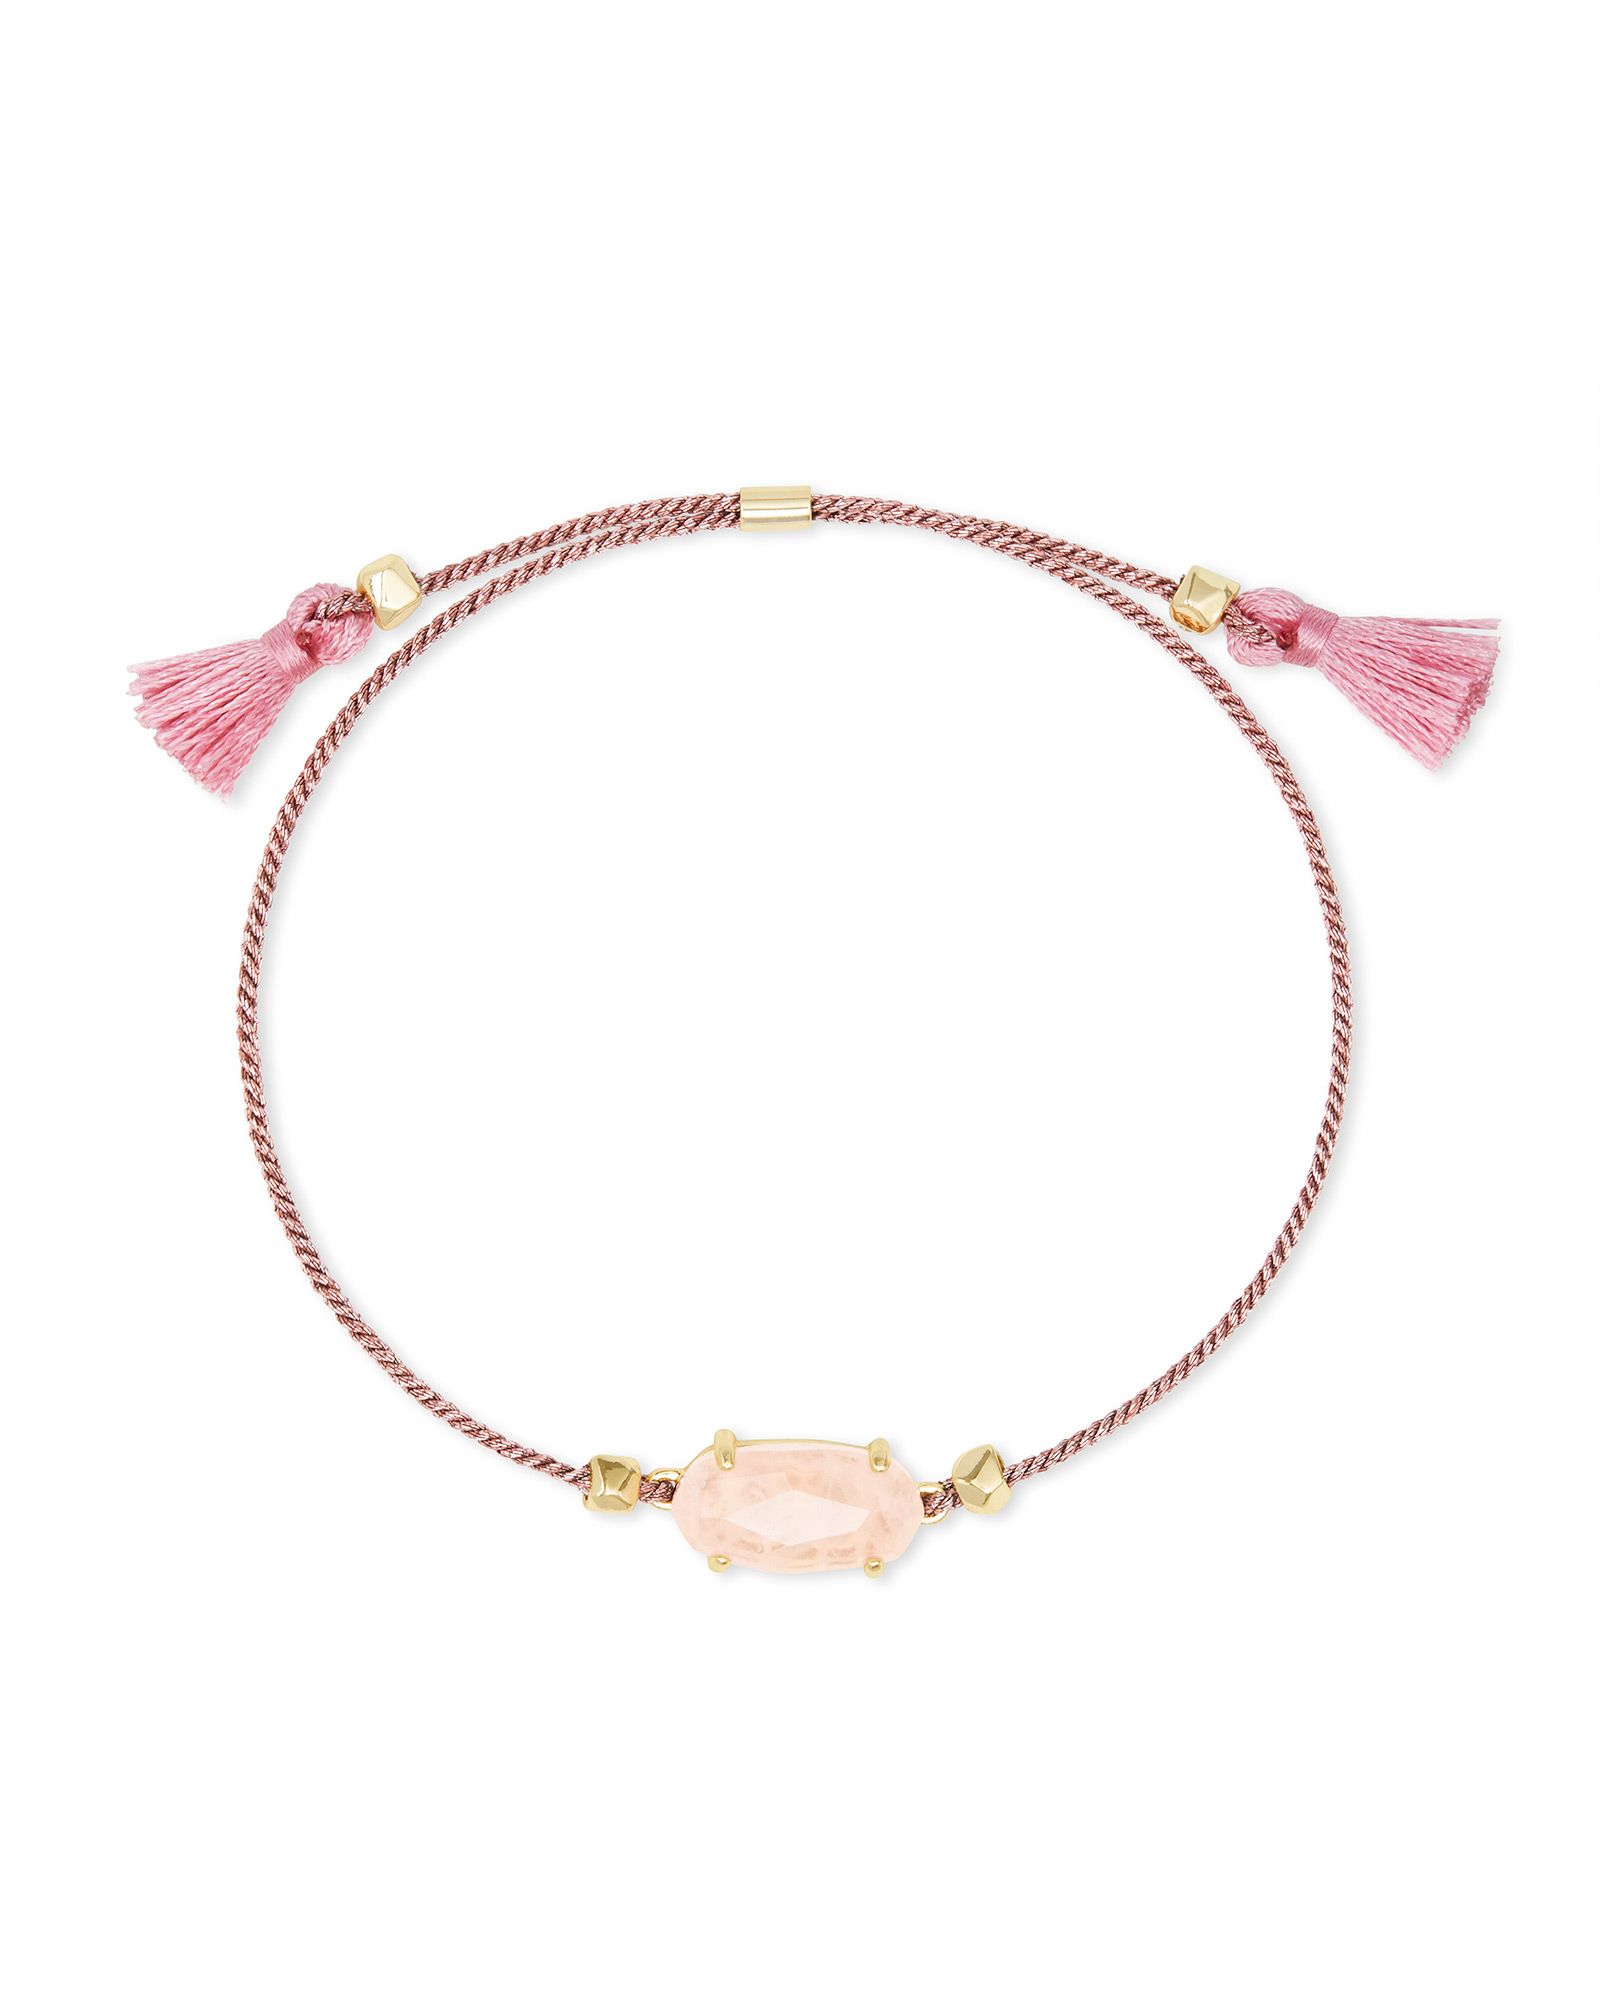 Everlyne Pink Cord Friendship Bracelet in Rose Quartz | Kendra Scott